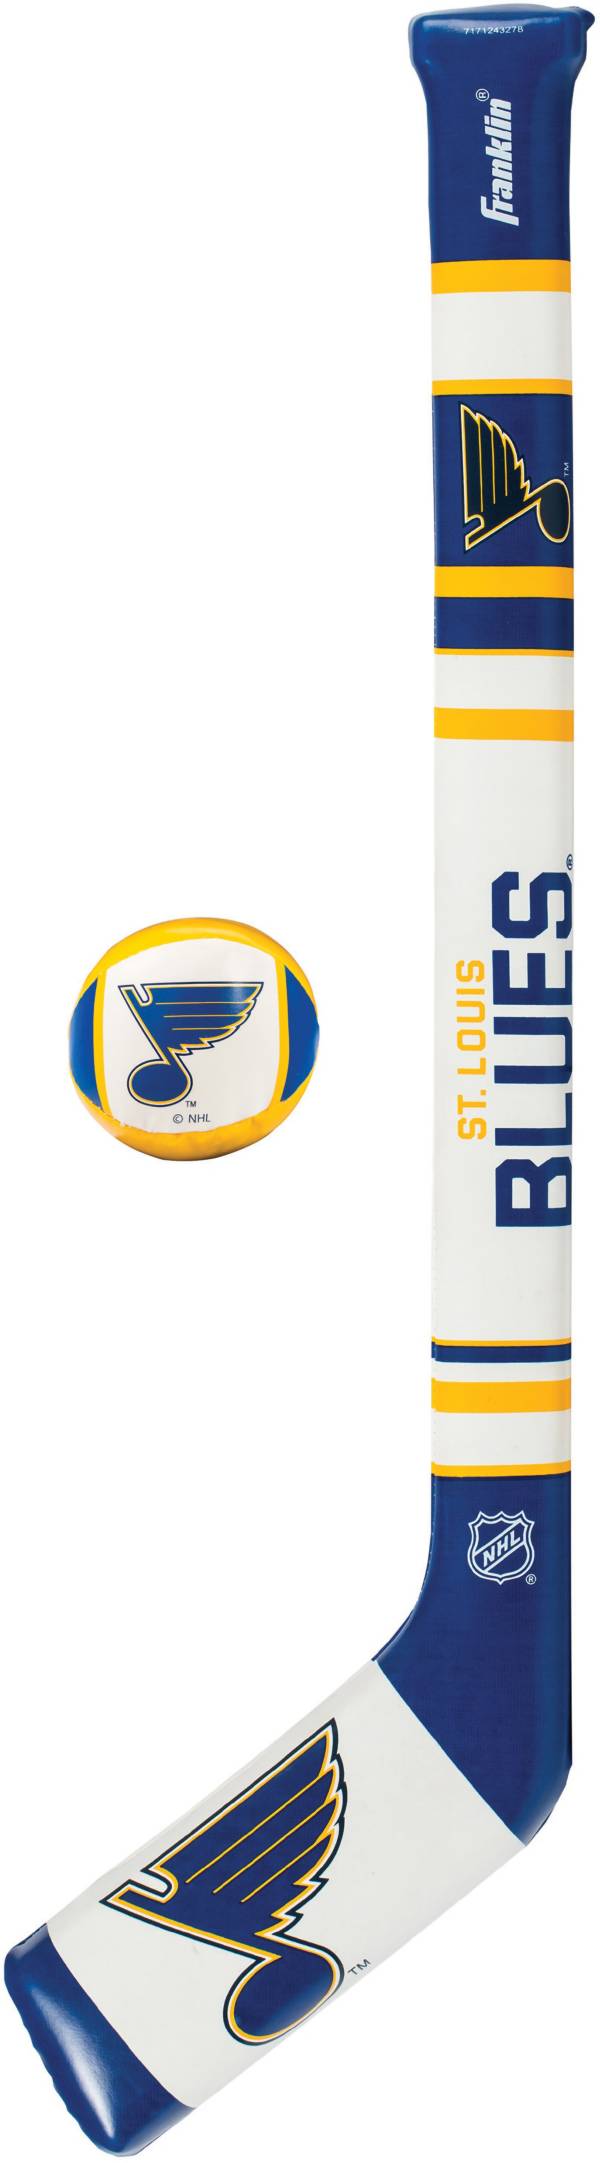 Franklin St. Louis Blues Mini Hockey Set product image